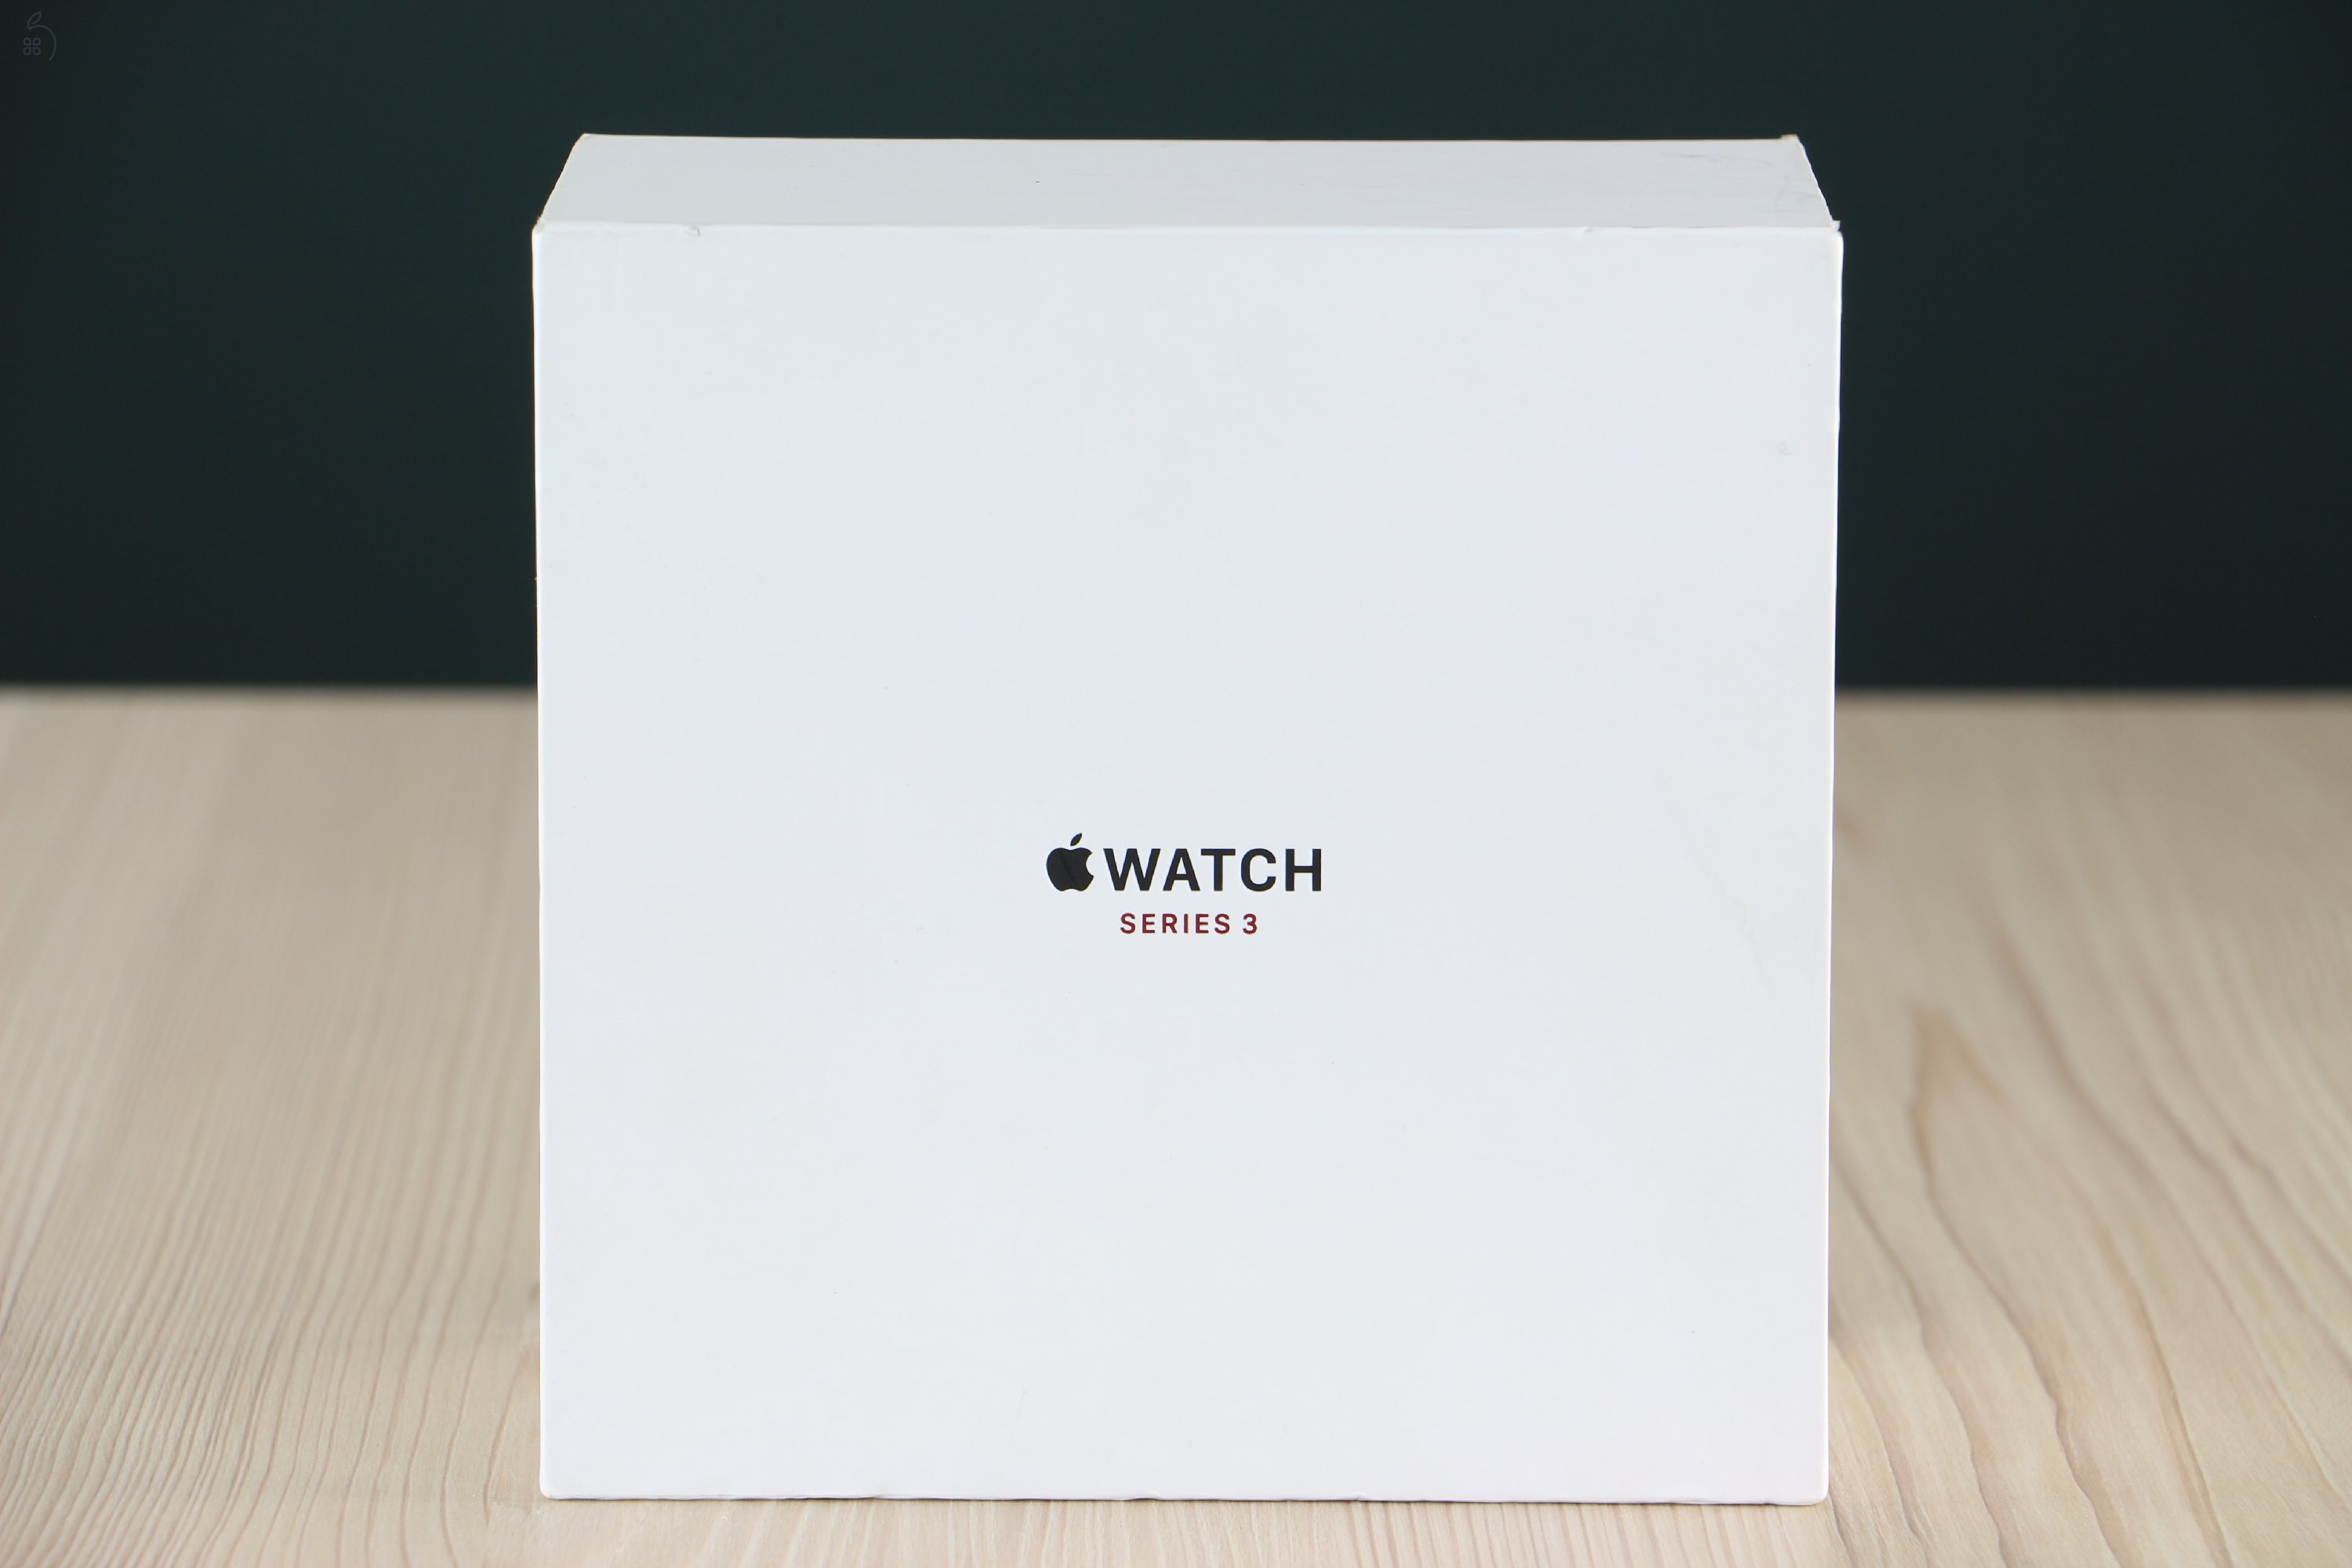  Használt Apple Watch S 3 42mm Stainless Steel Cellular US-3599